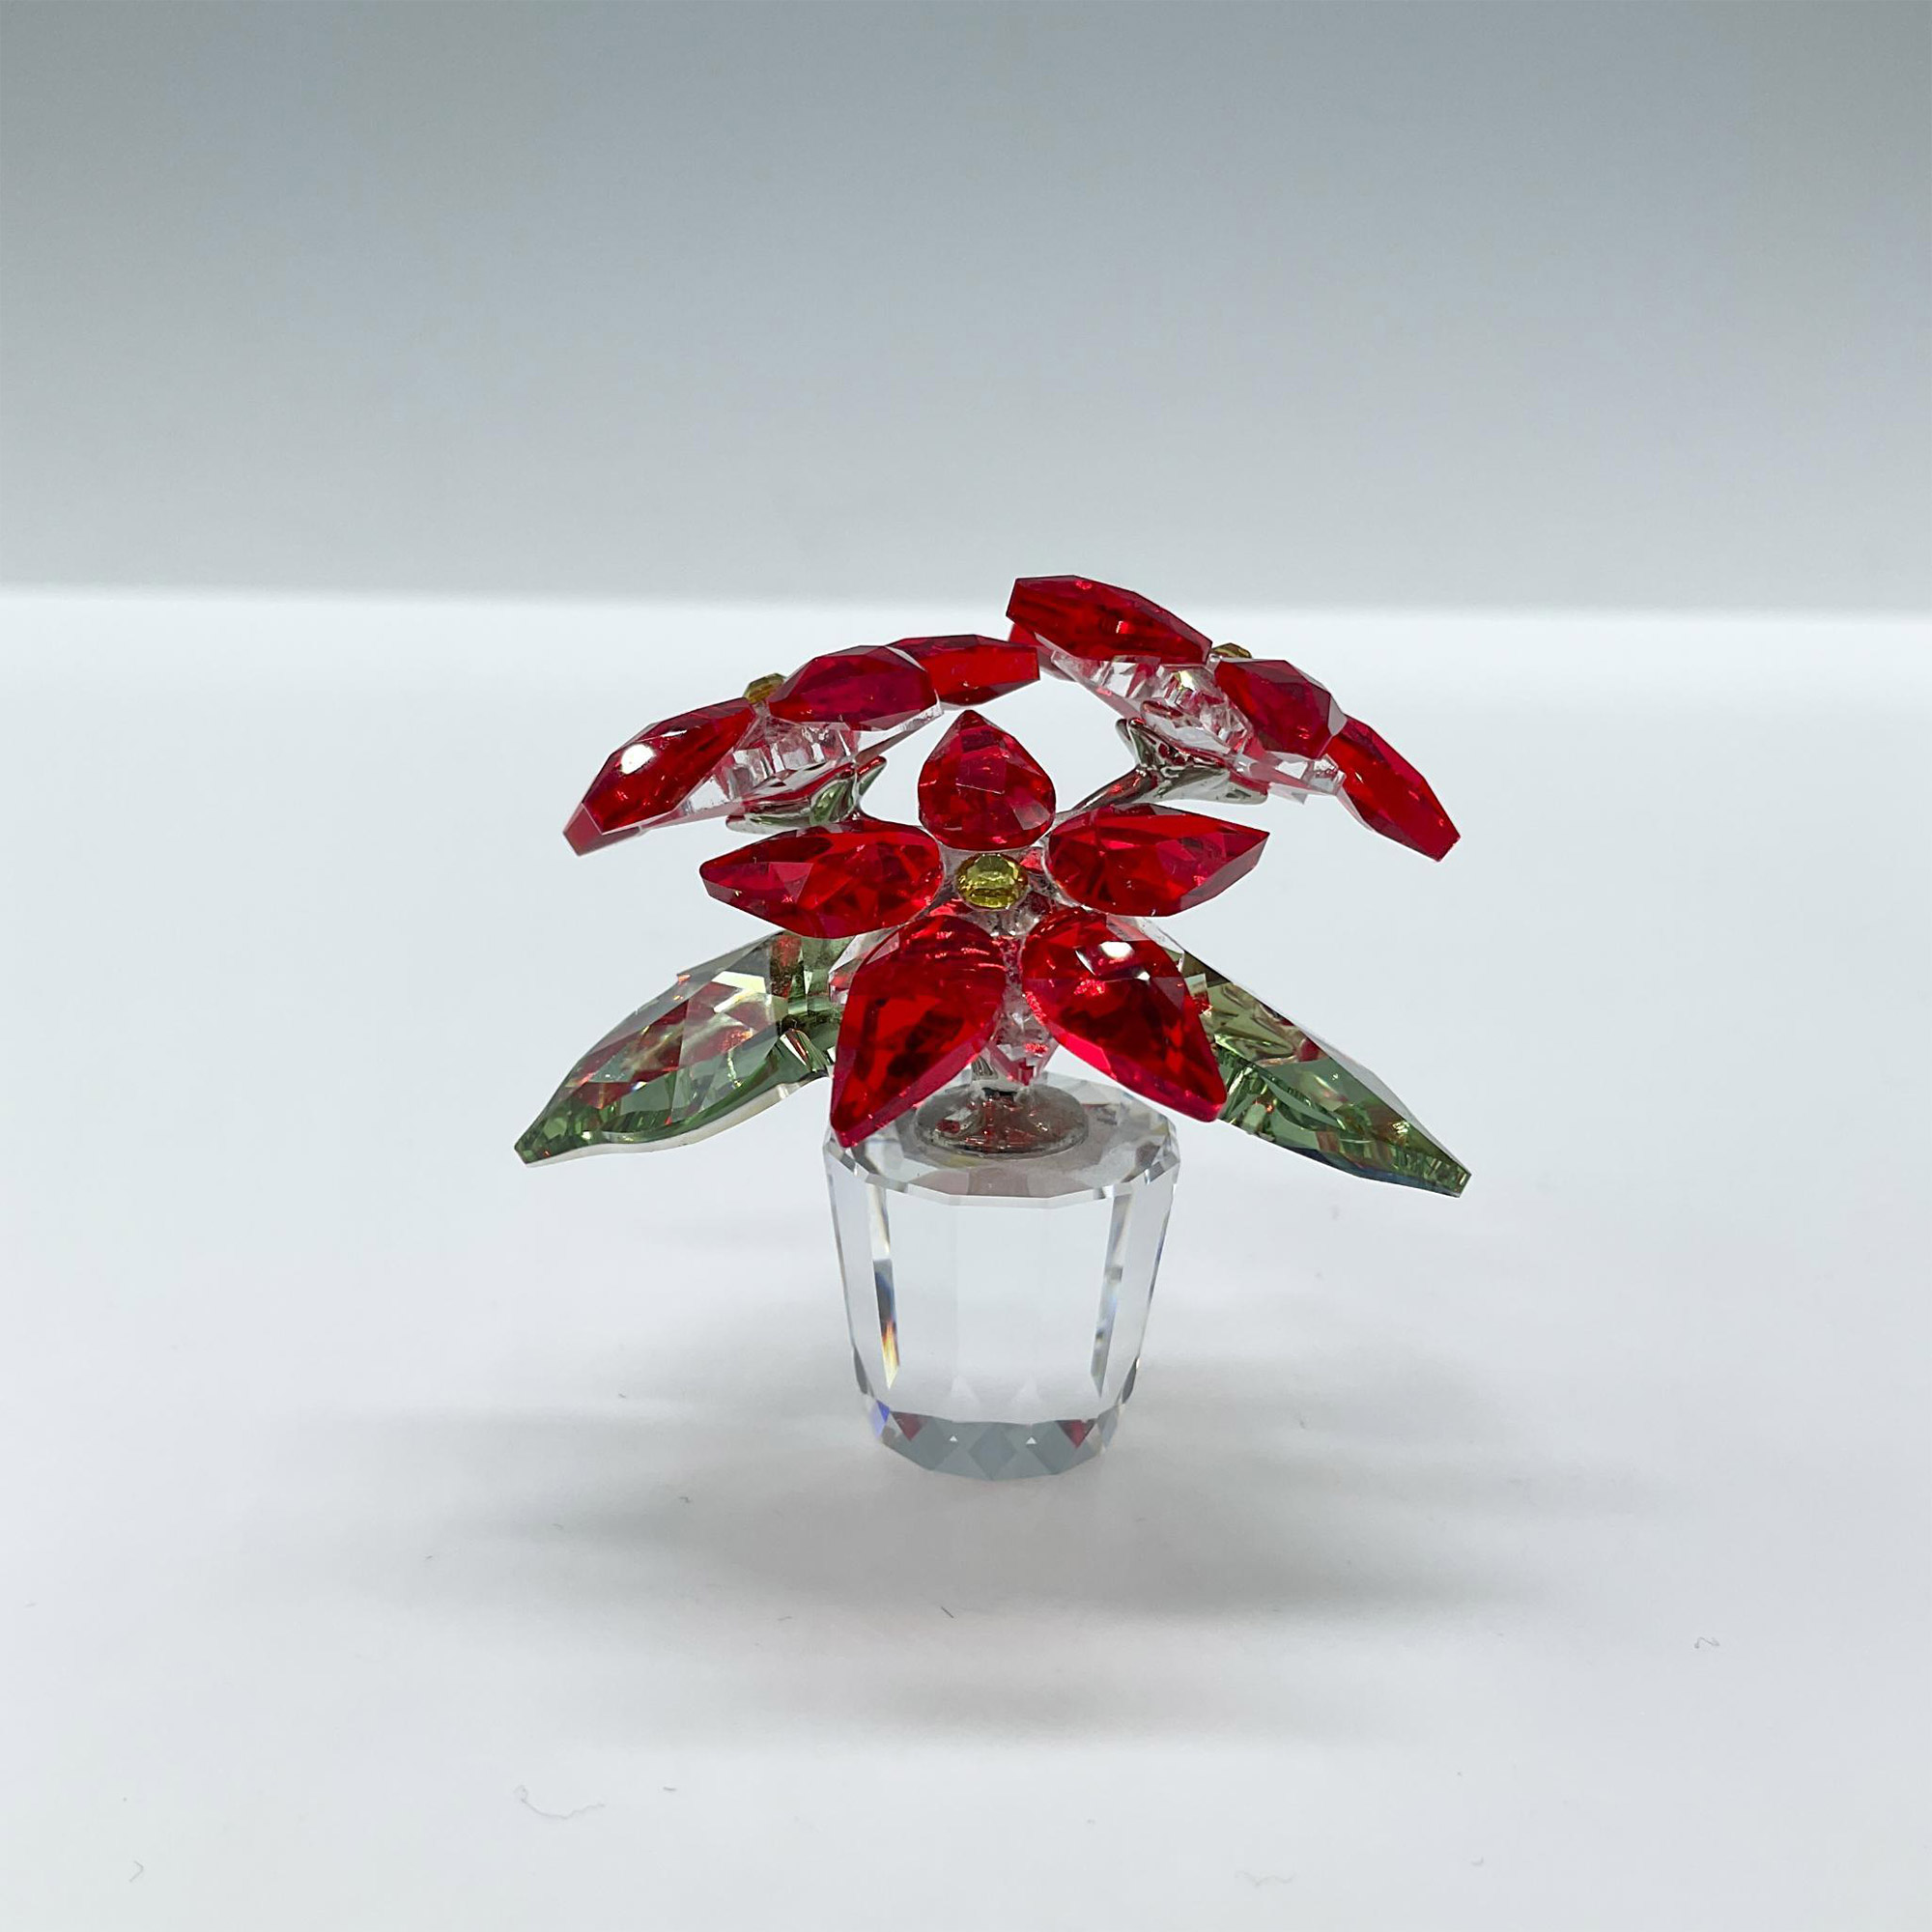 Swarovski Crystal Figurine, Poinsettia